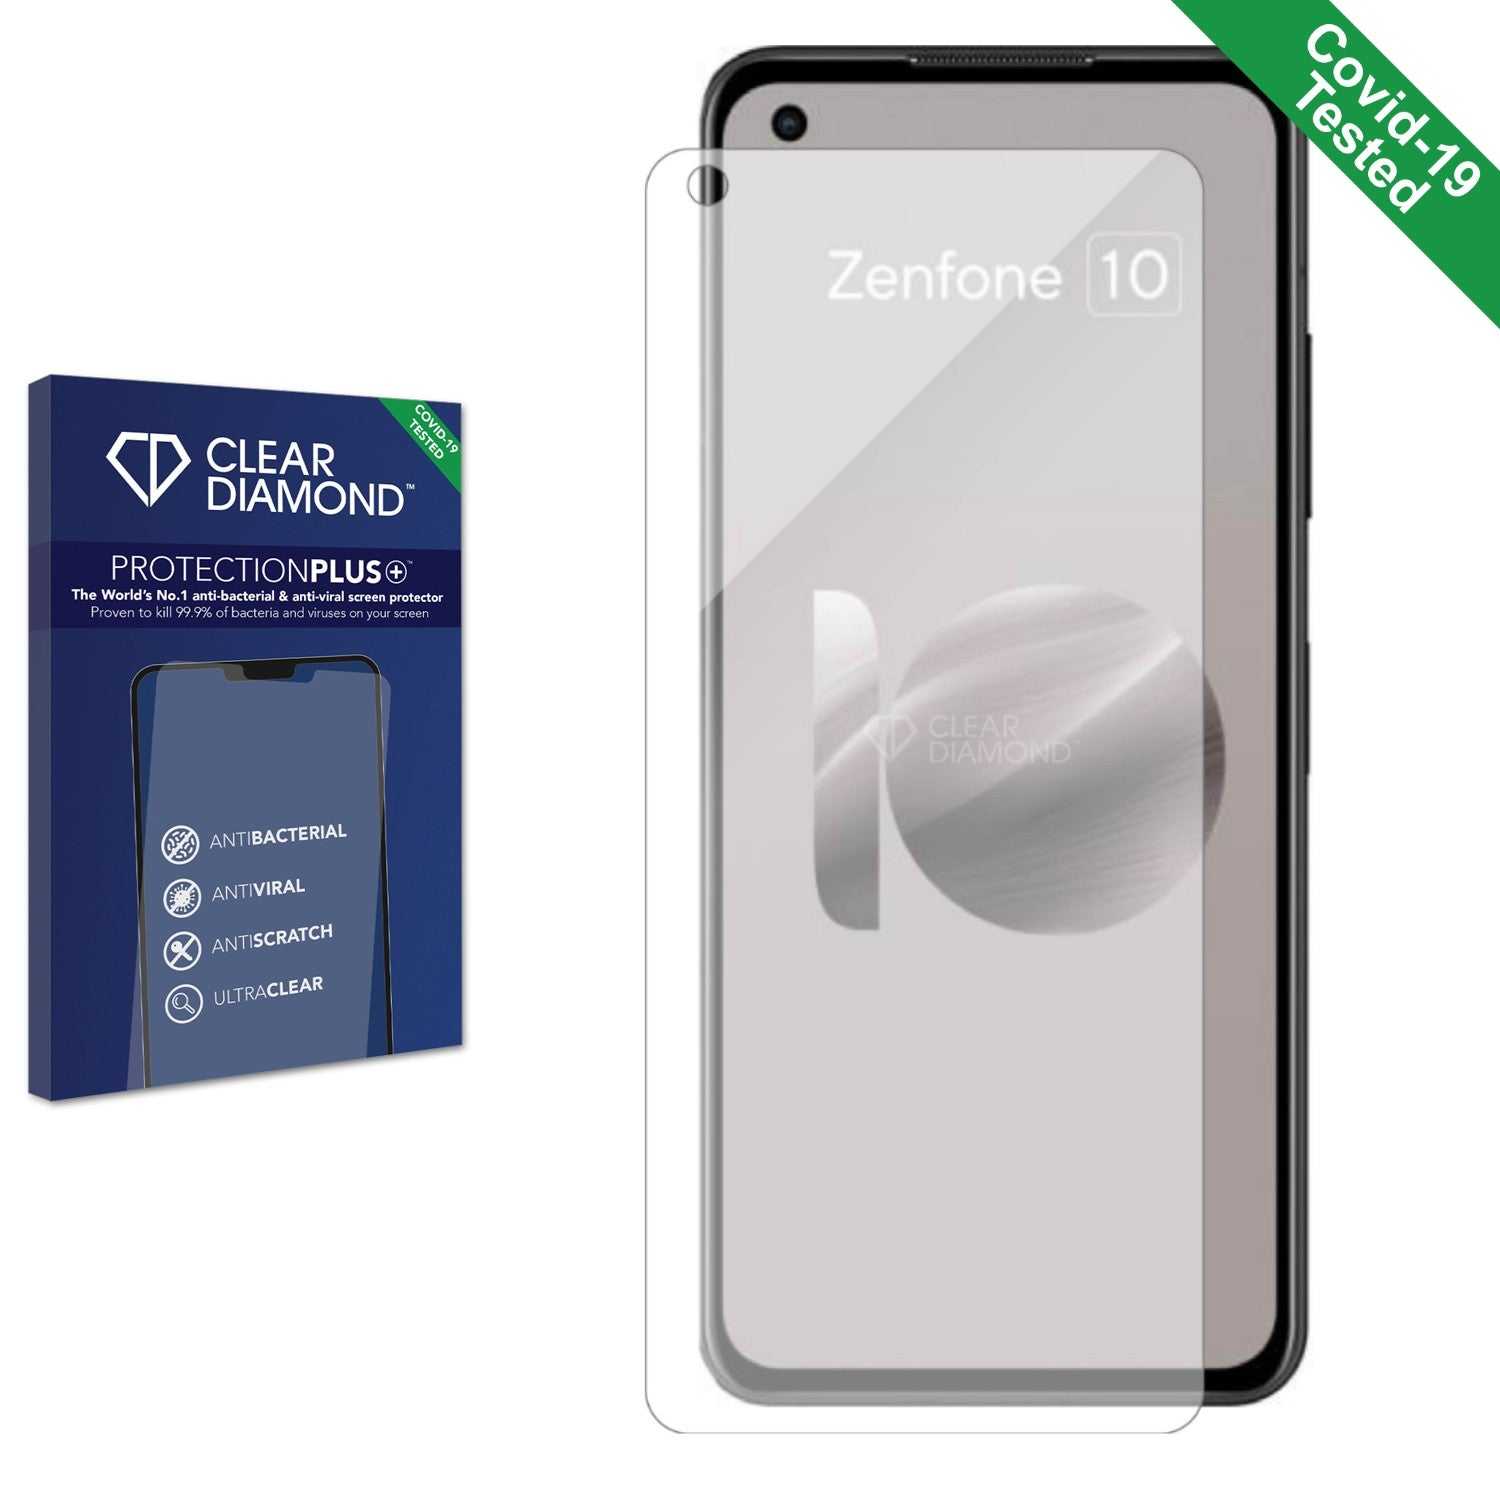 ScreenShield, Clear Diamond Anti-viral Screen Protector for Asus ZenFone 10